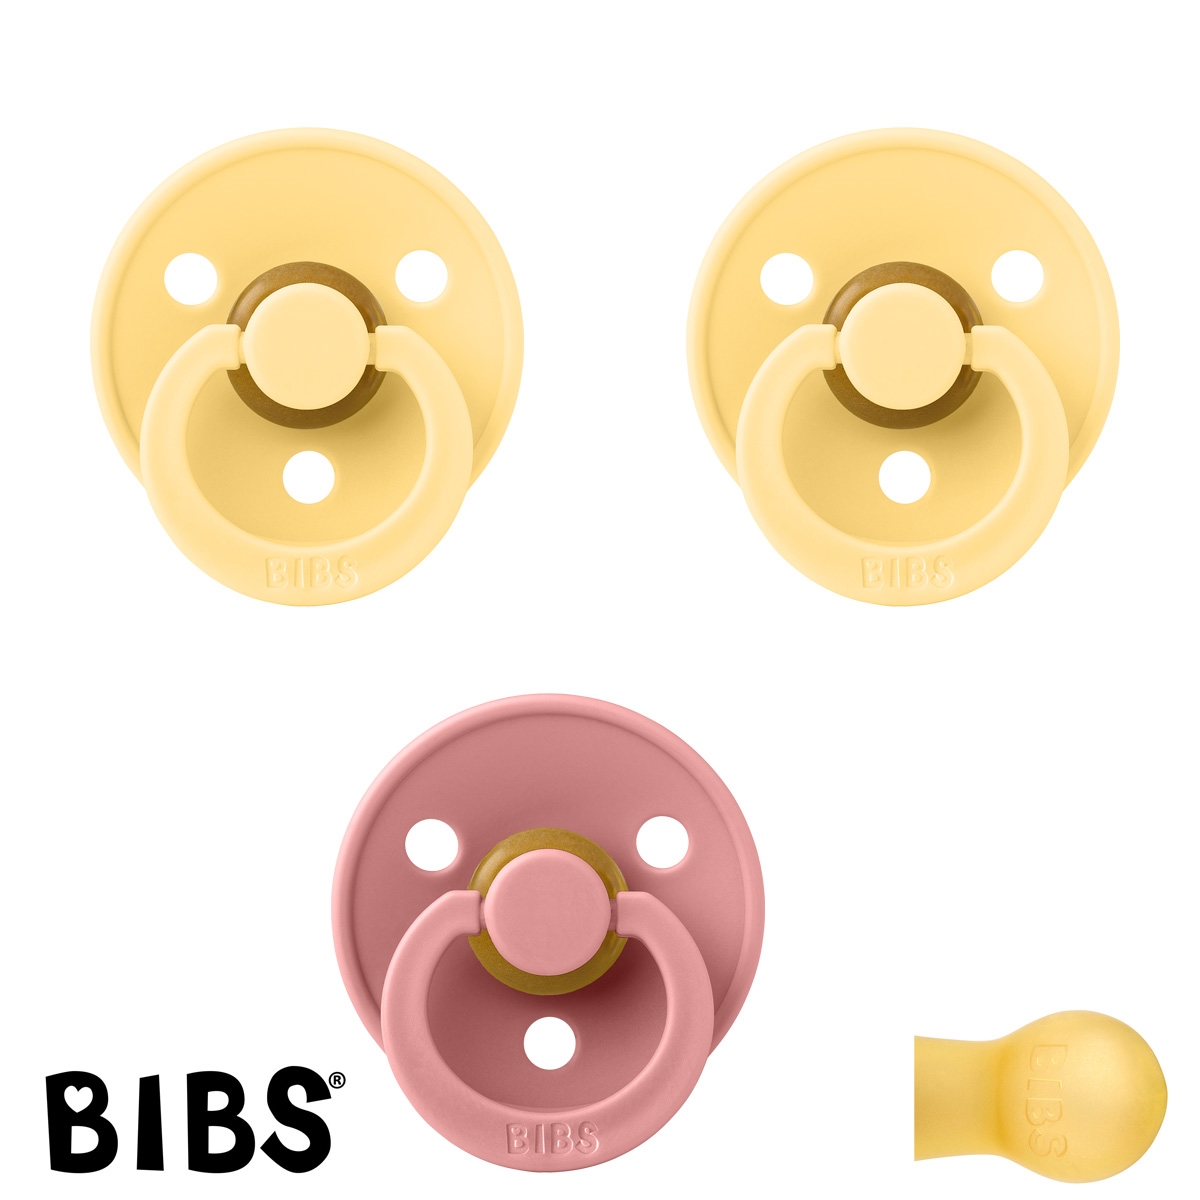 BIBS Colour Sutter med navn str2, Pale Butter, 1 Dusty Pink, Runde latex, Pakke med 3 sutter